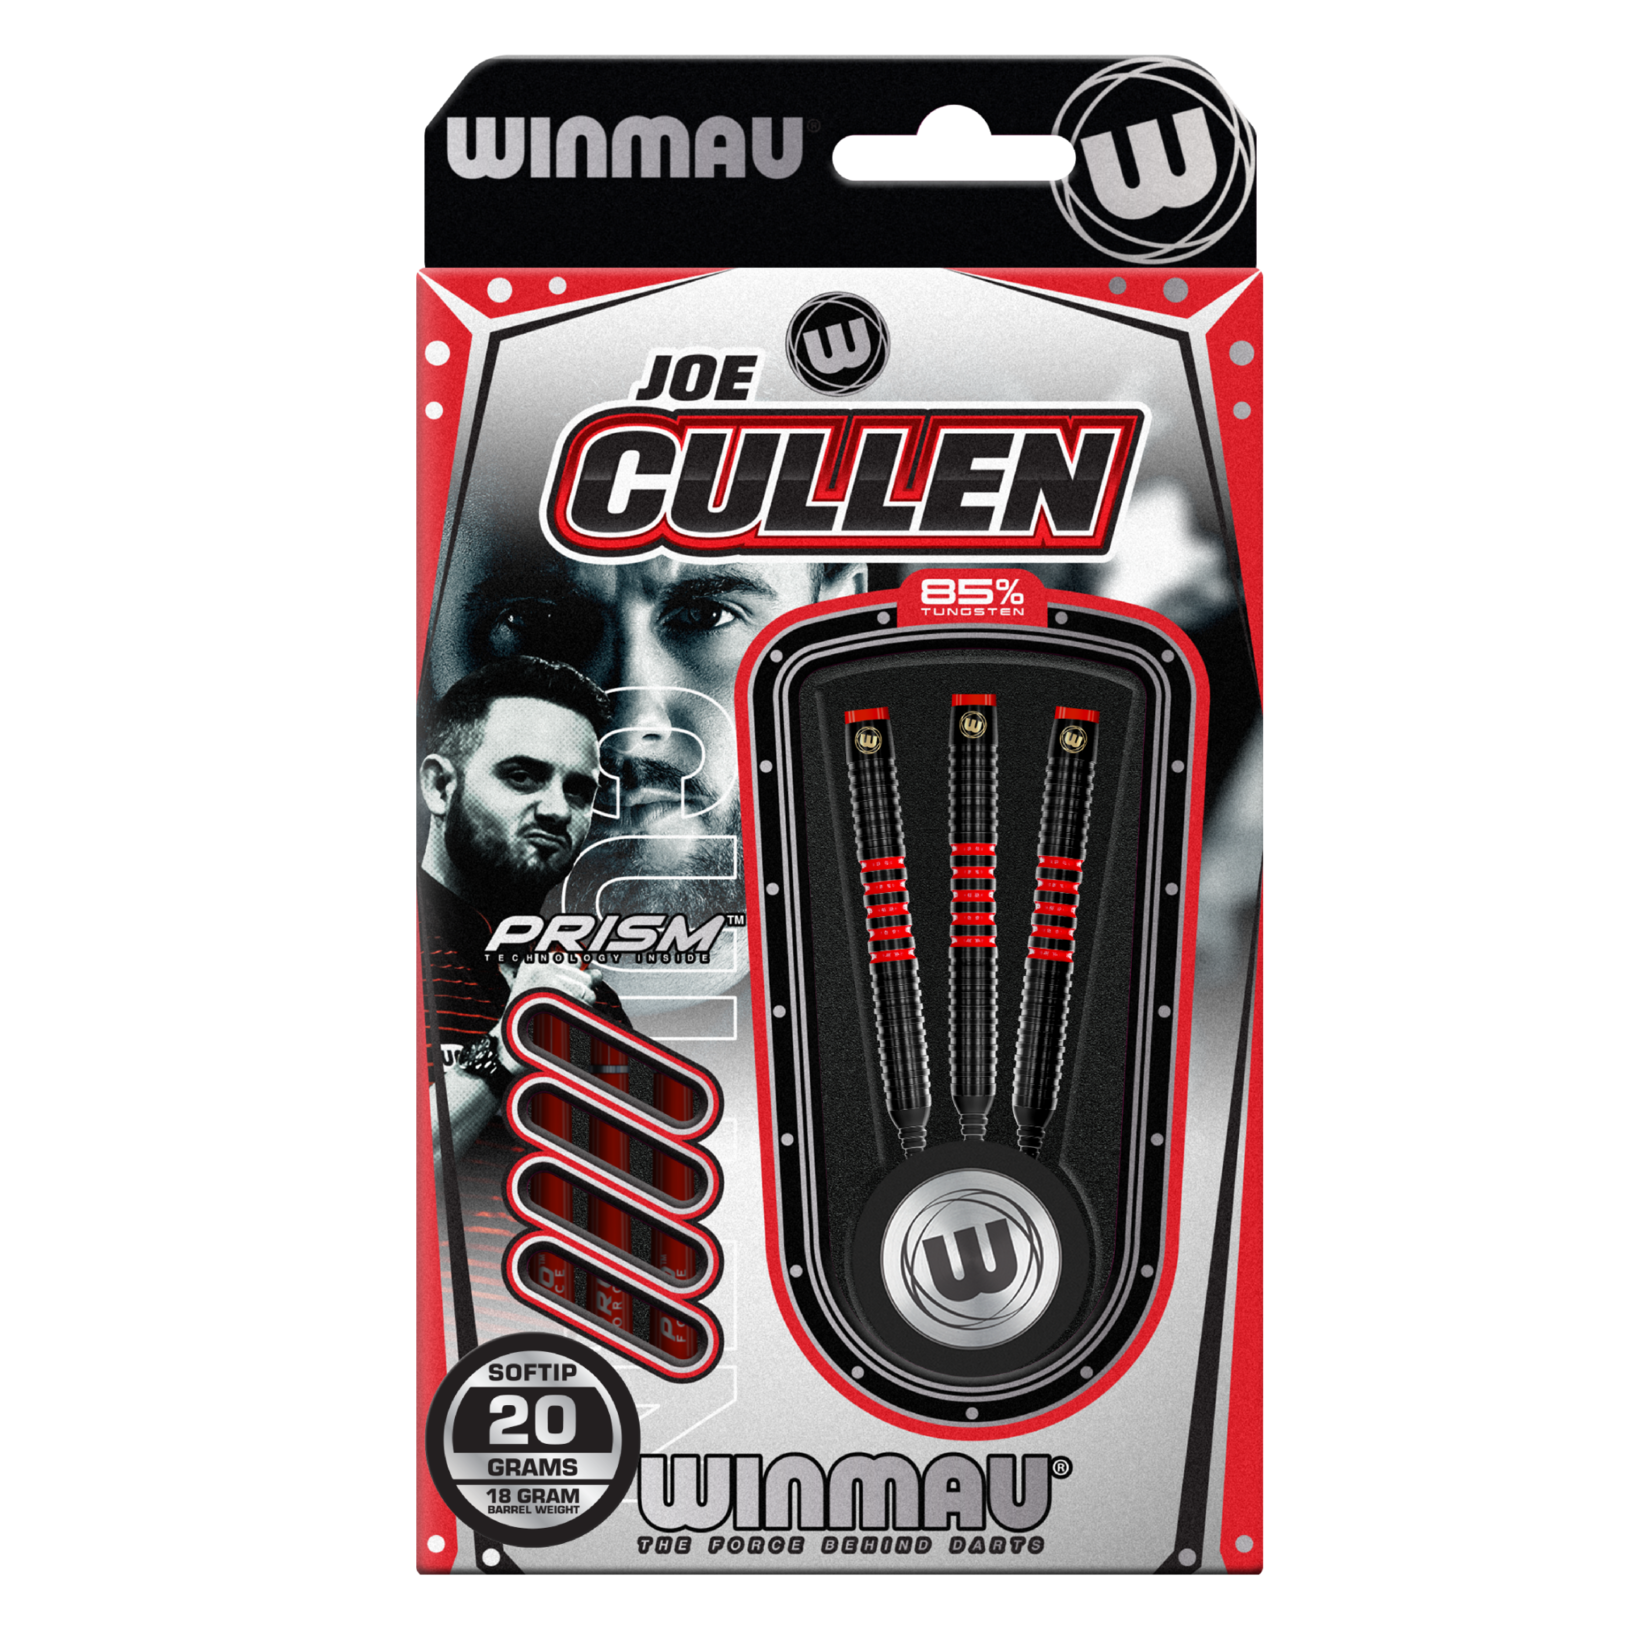 Winmau Darts Winmau Joe Cullen Pro-Series 85% Soft Tip Darts 20g